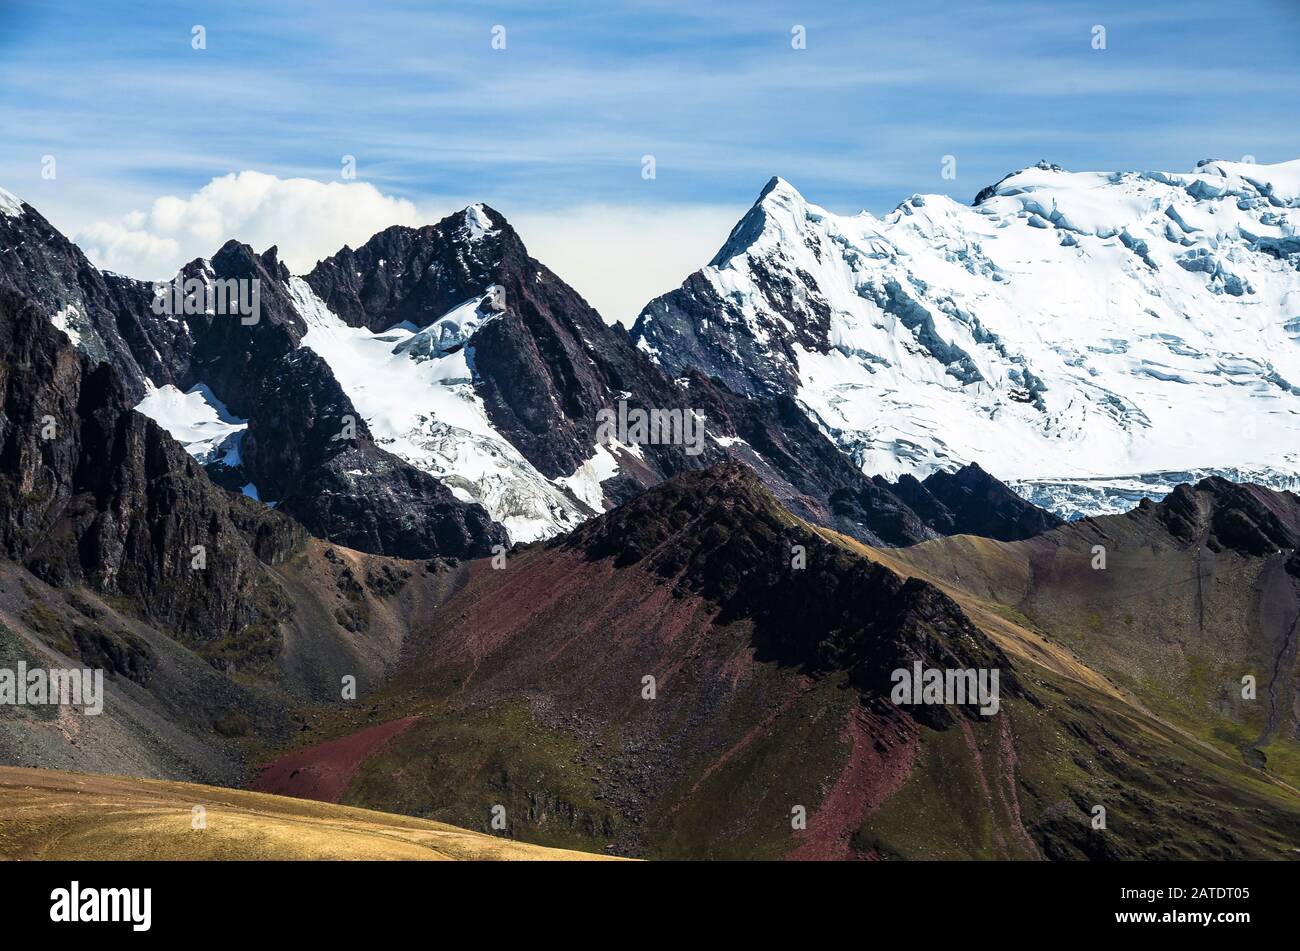 Vinicunca, Peru - Rainbow Mountain (5200 m) in Andes, Cordillera de los Andes, Cusco region in South America. Mountains Peru landscape Stock Photo